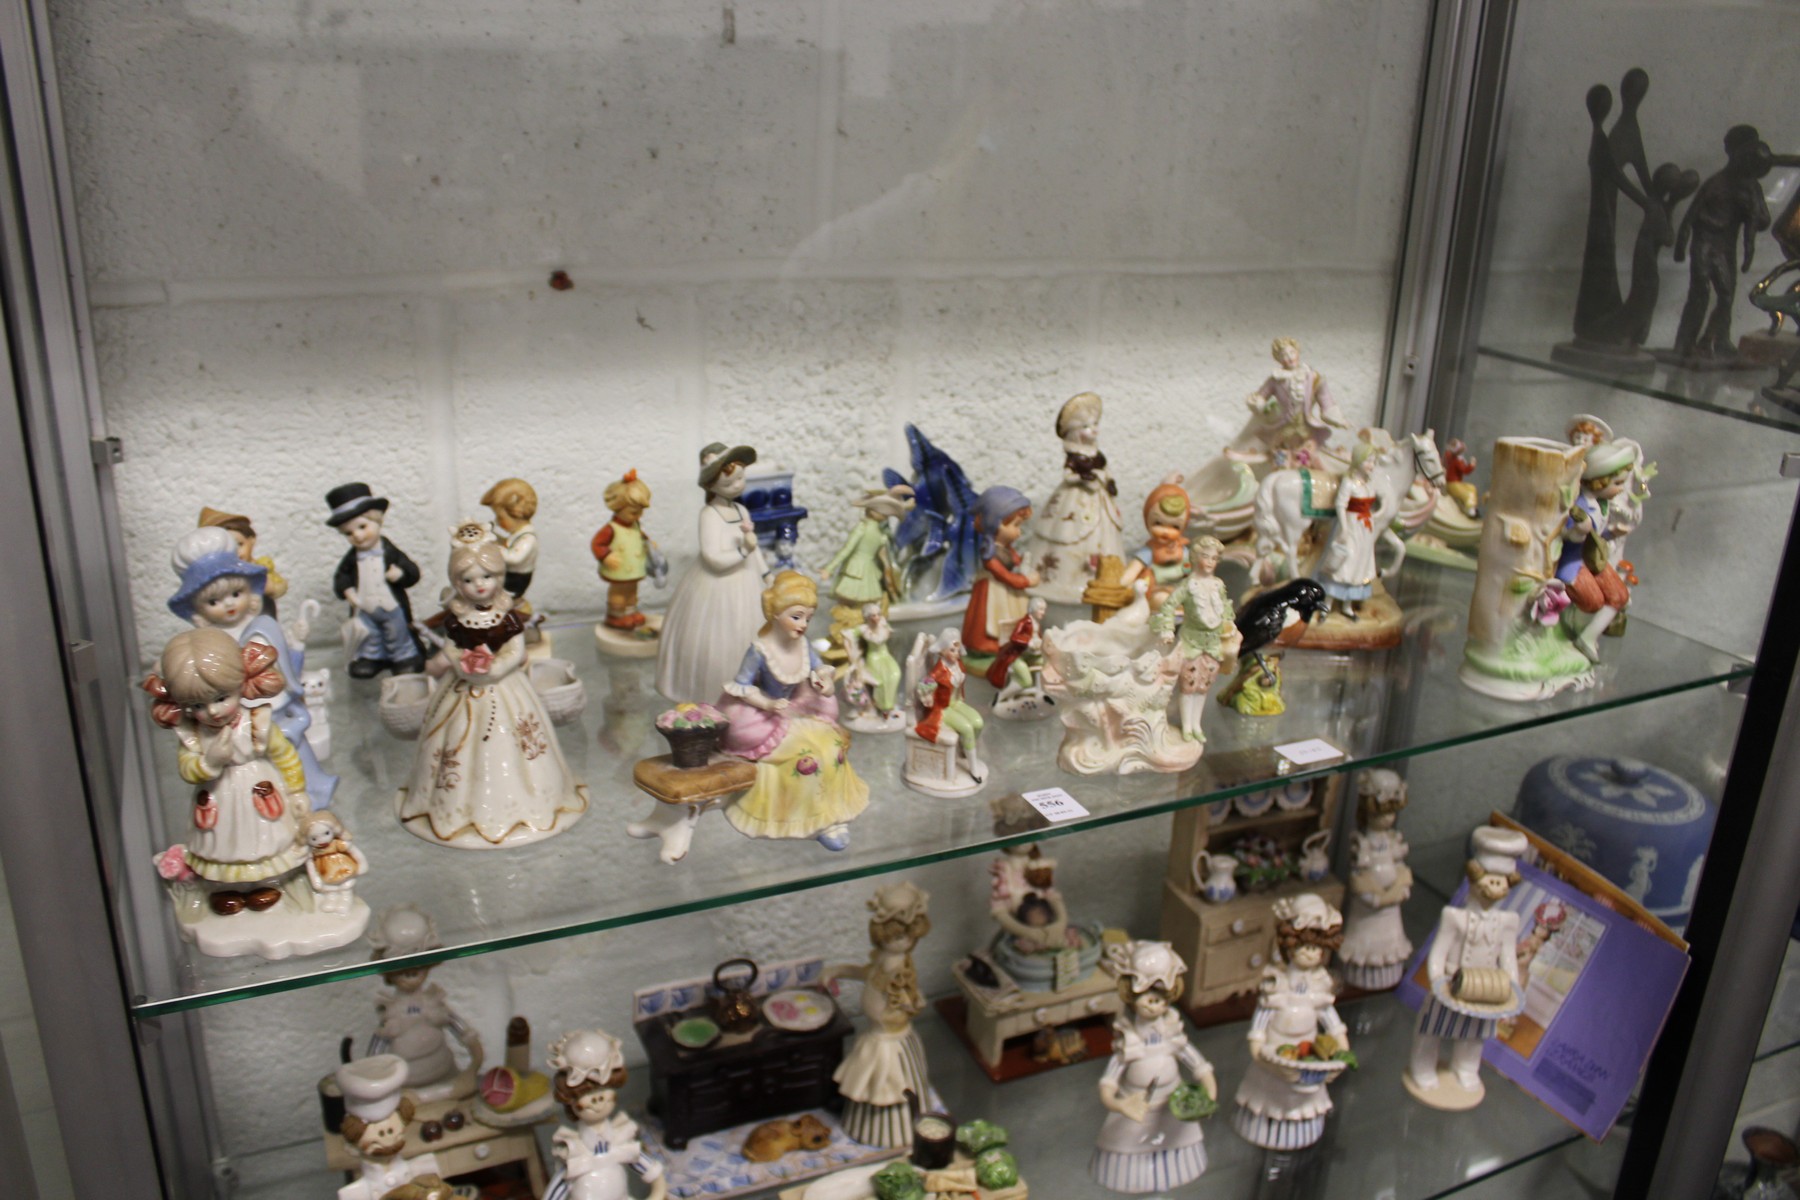 A quantity of decorative figurines etc.